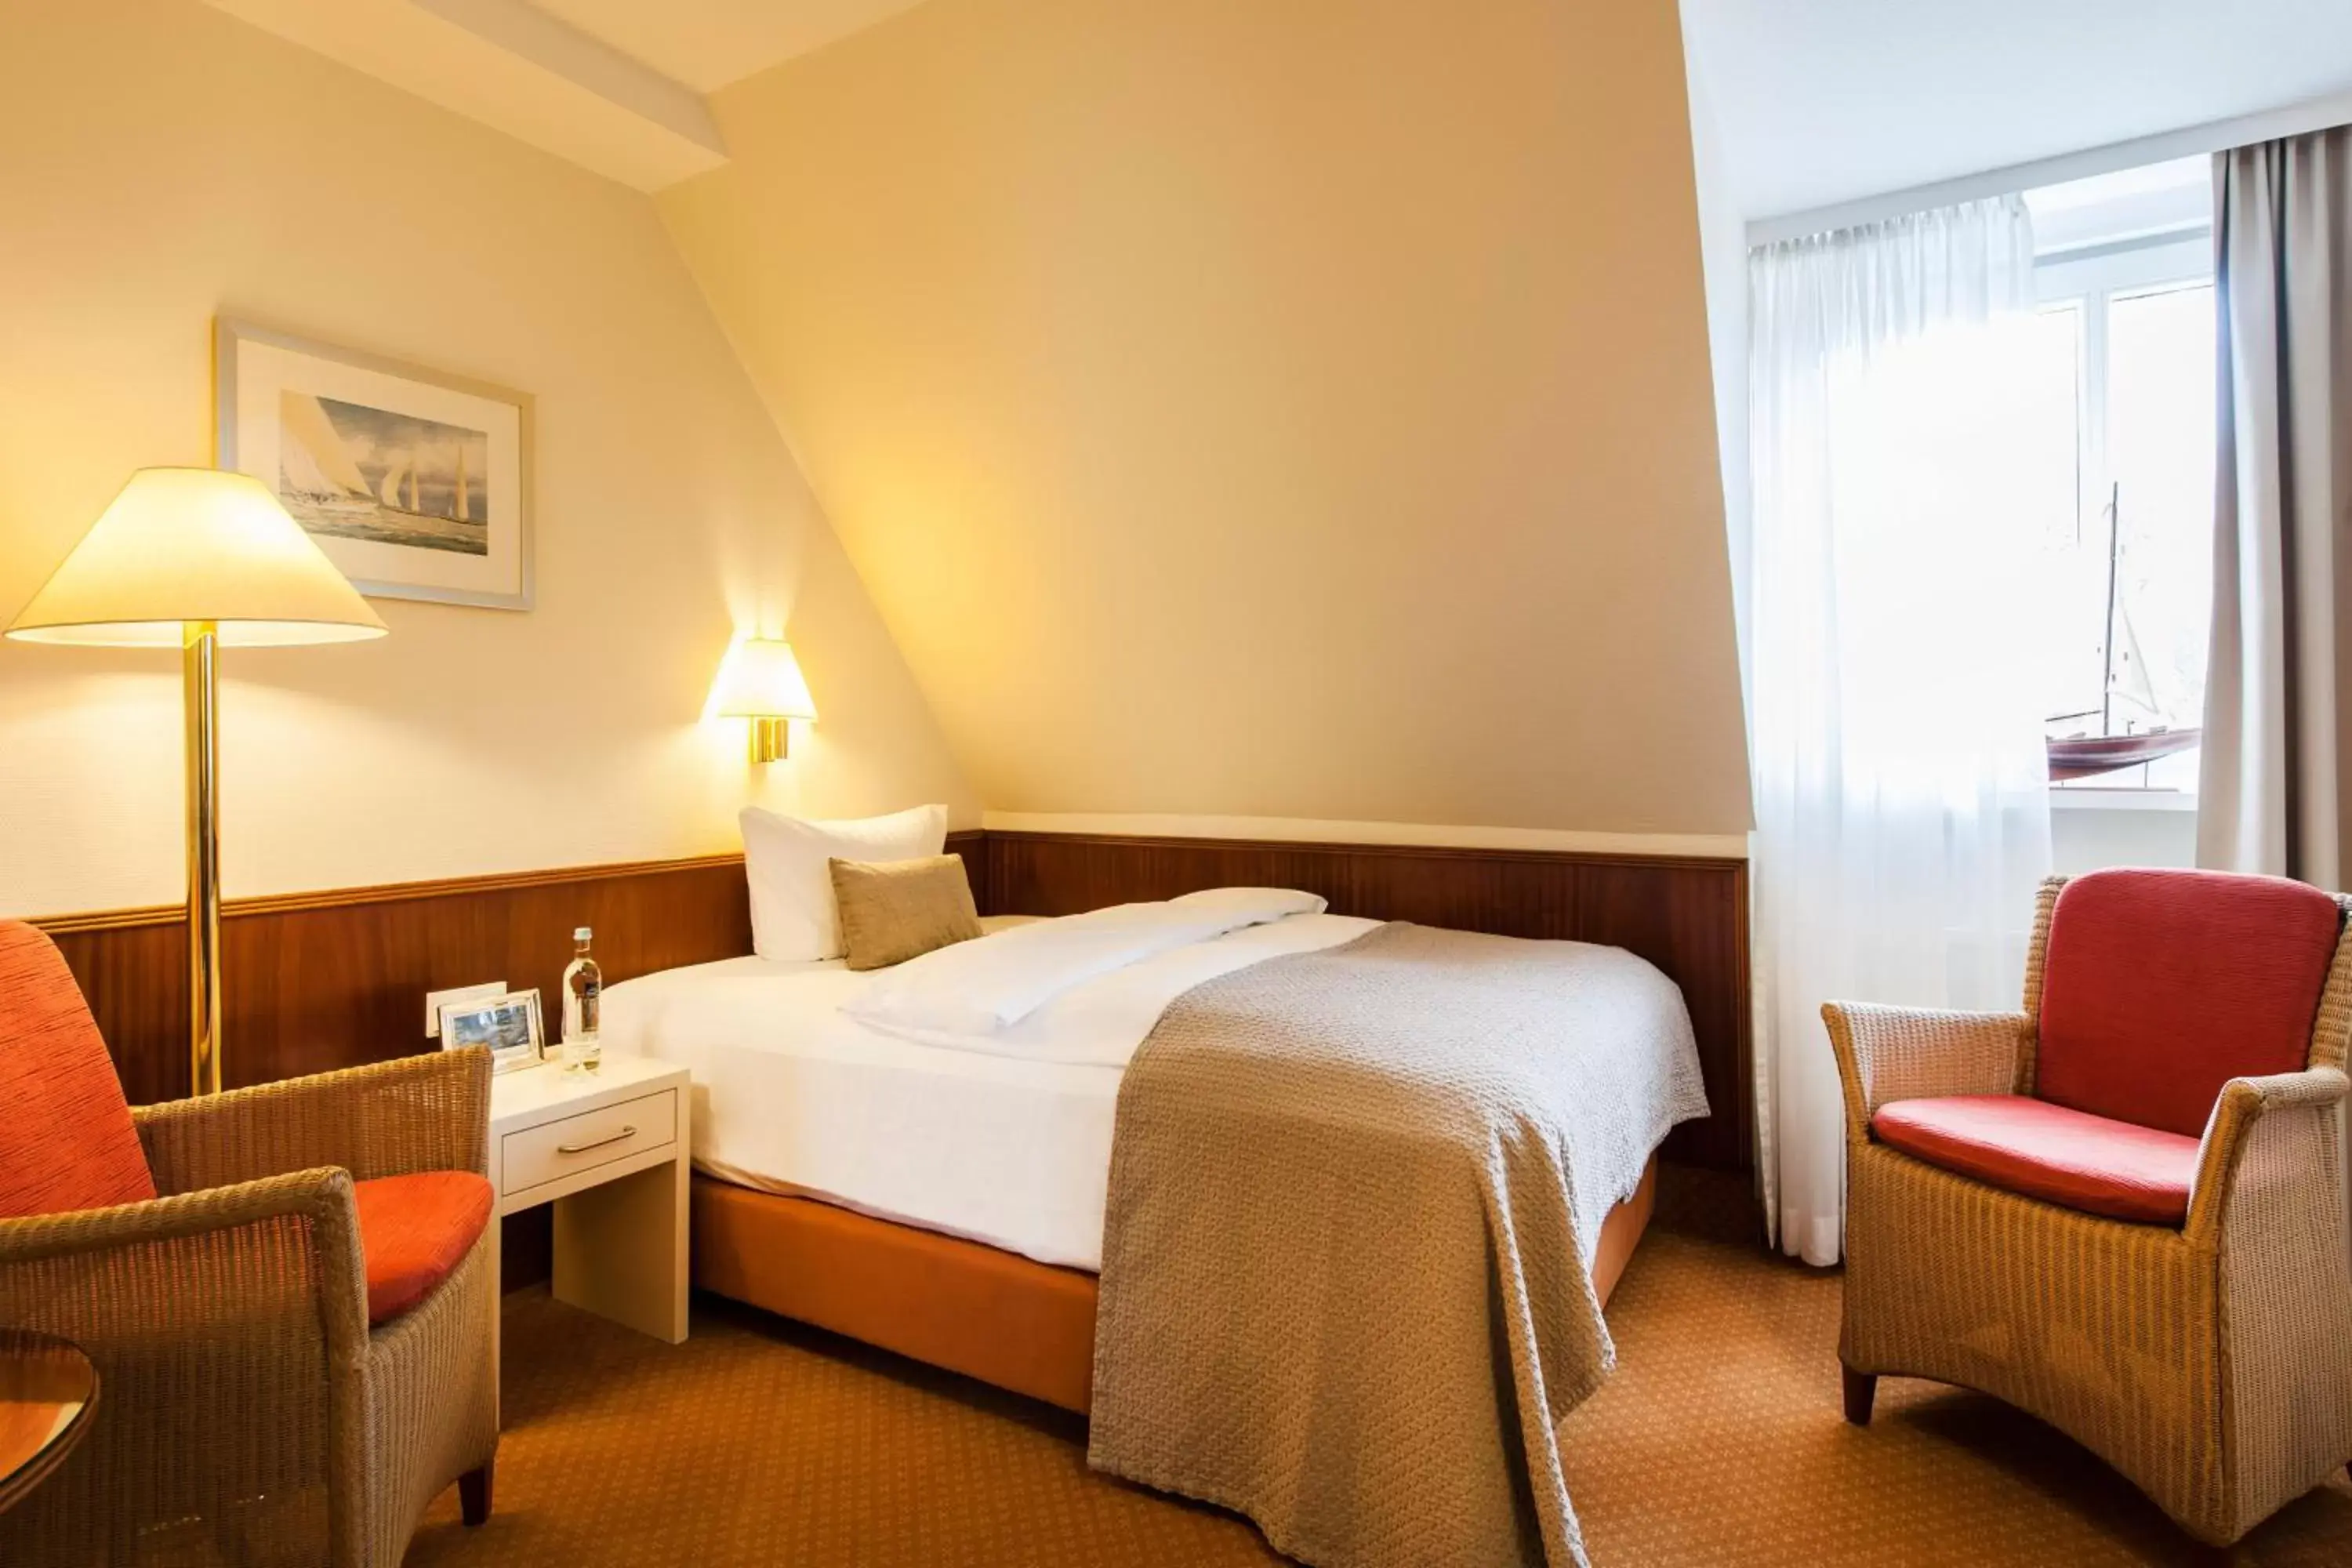 Bed in Hotel Birke, Ringhotel Kiel